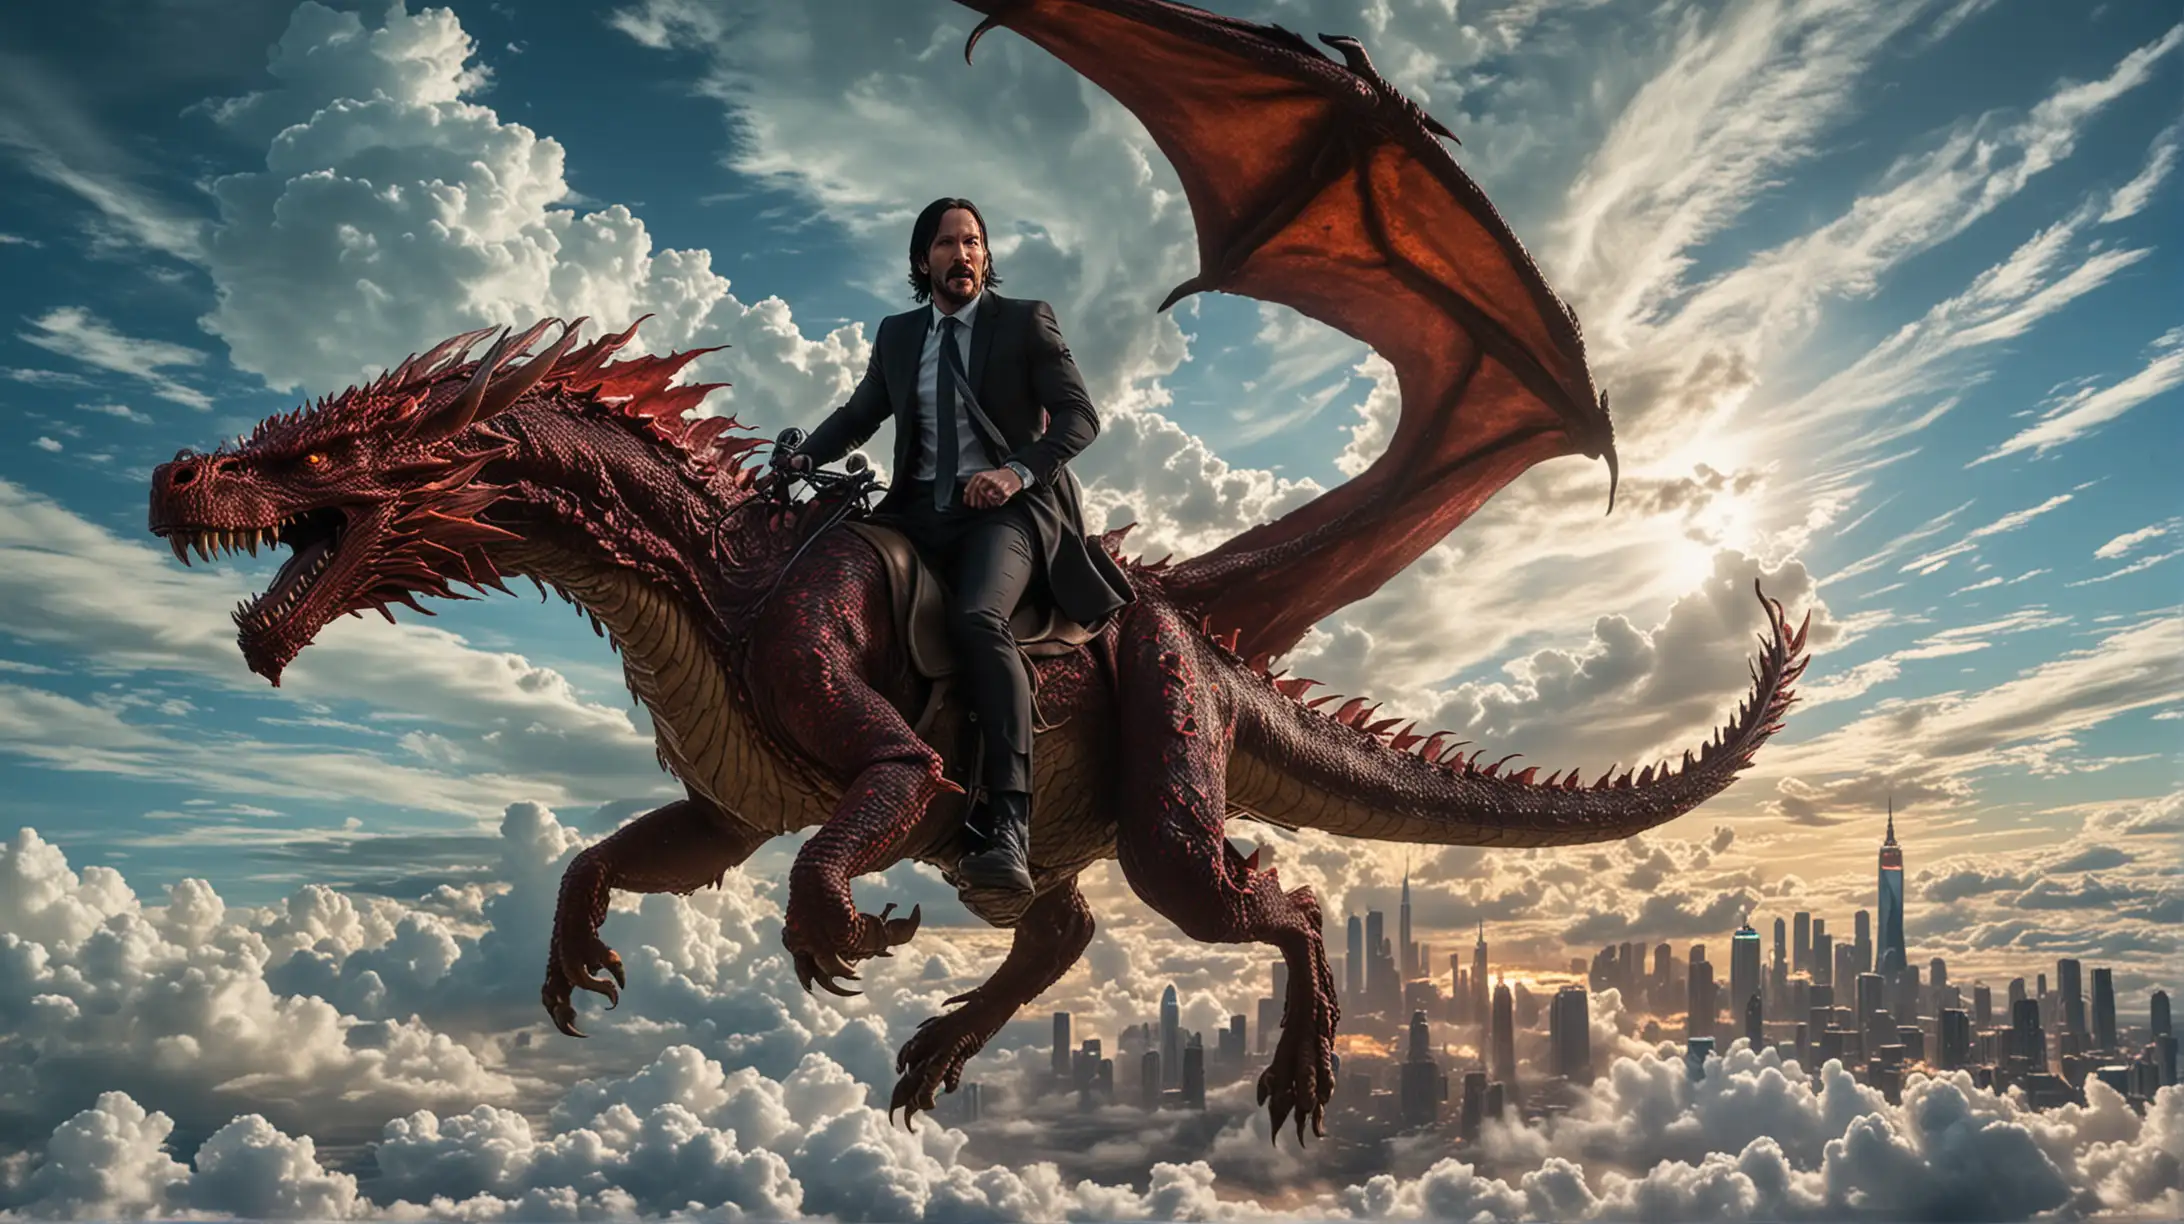 John Wick riding a dragon in the sky